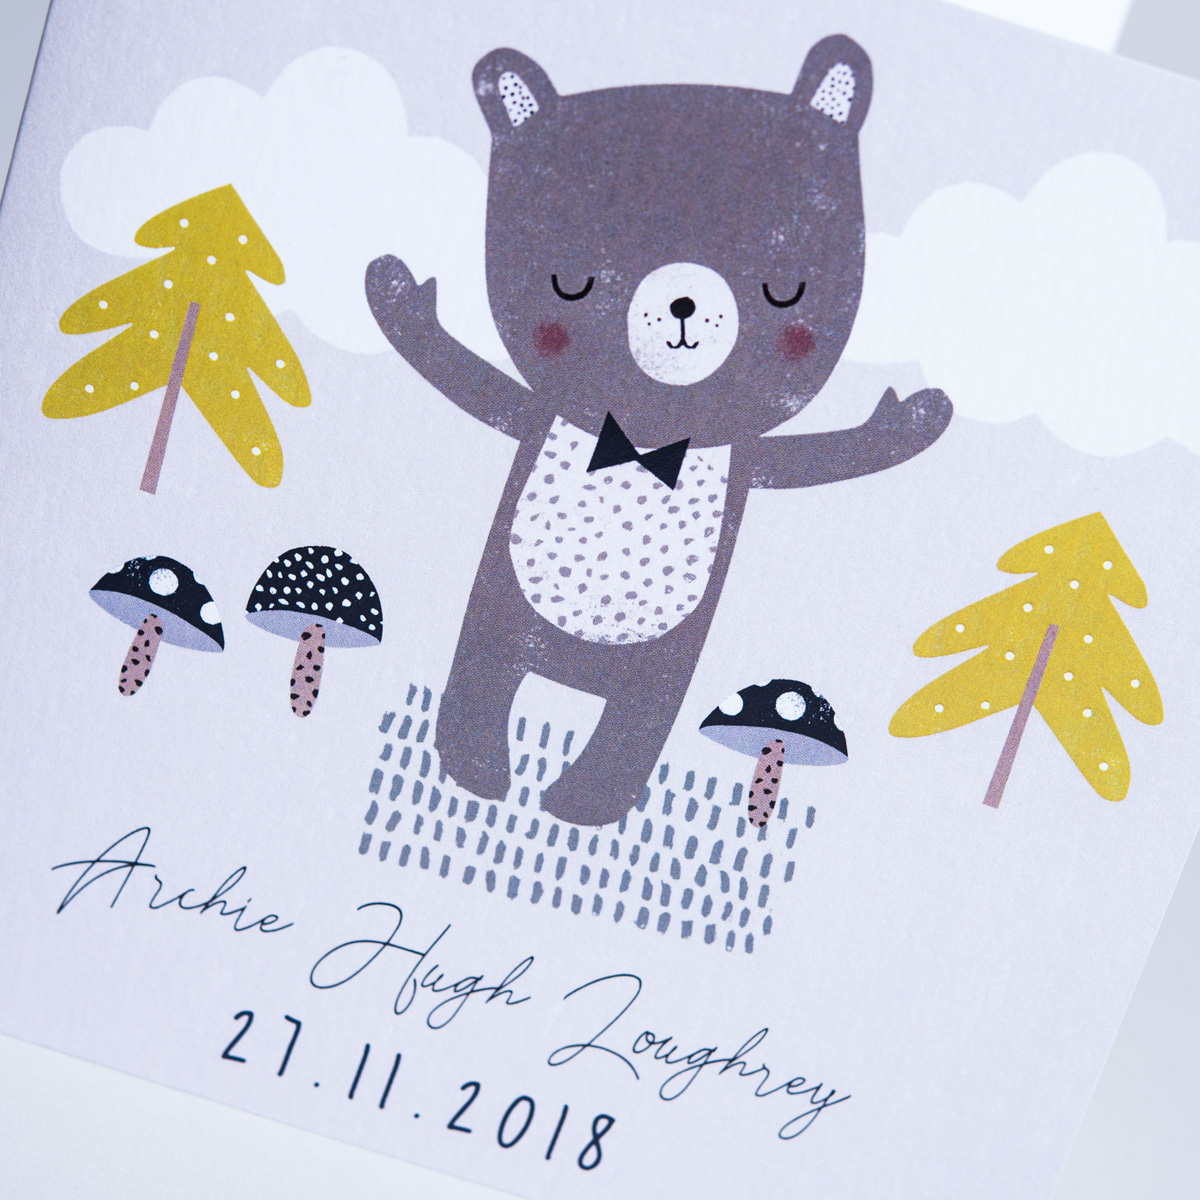 Personalised Card - Bear